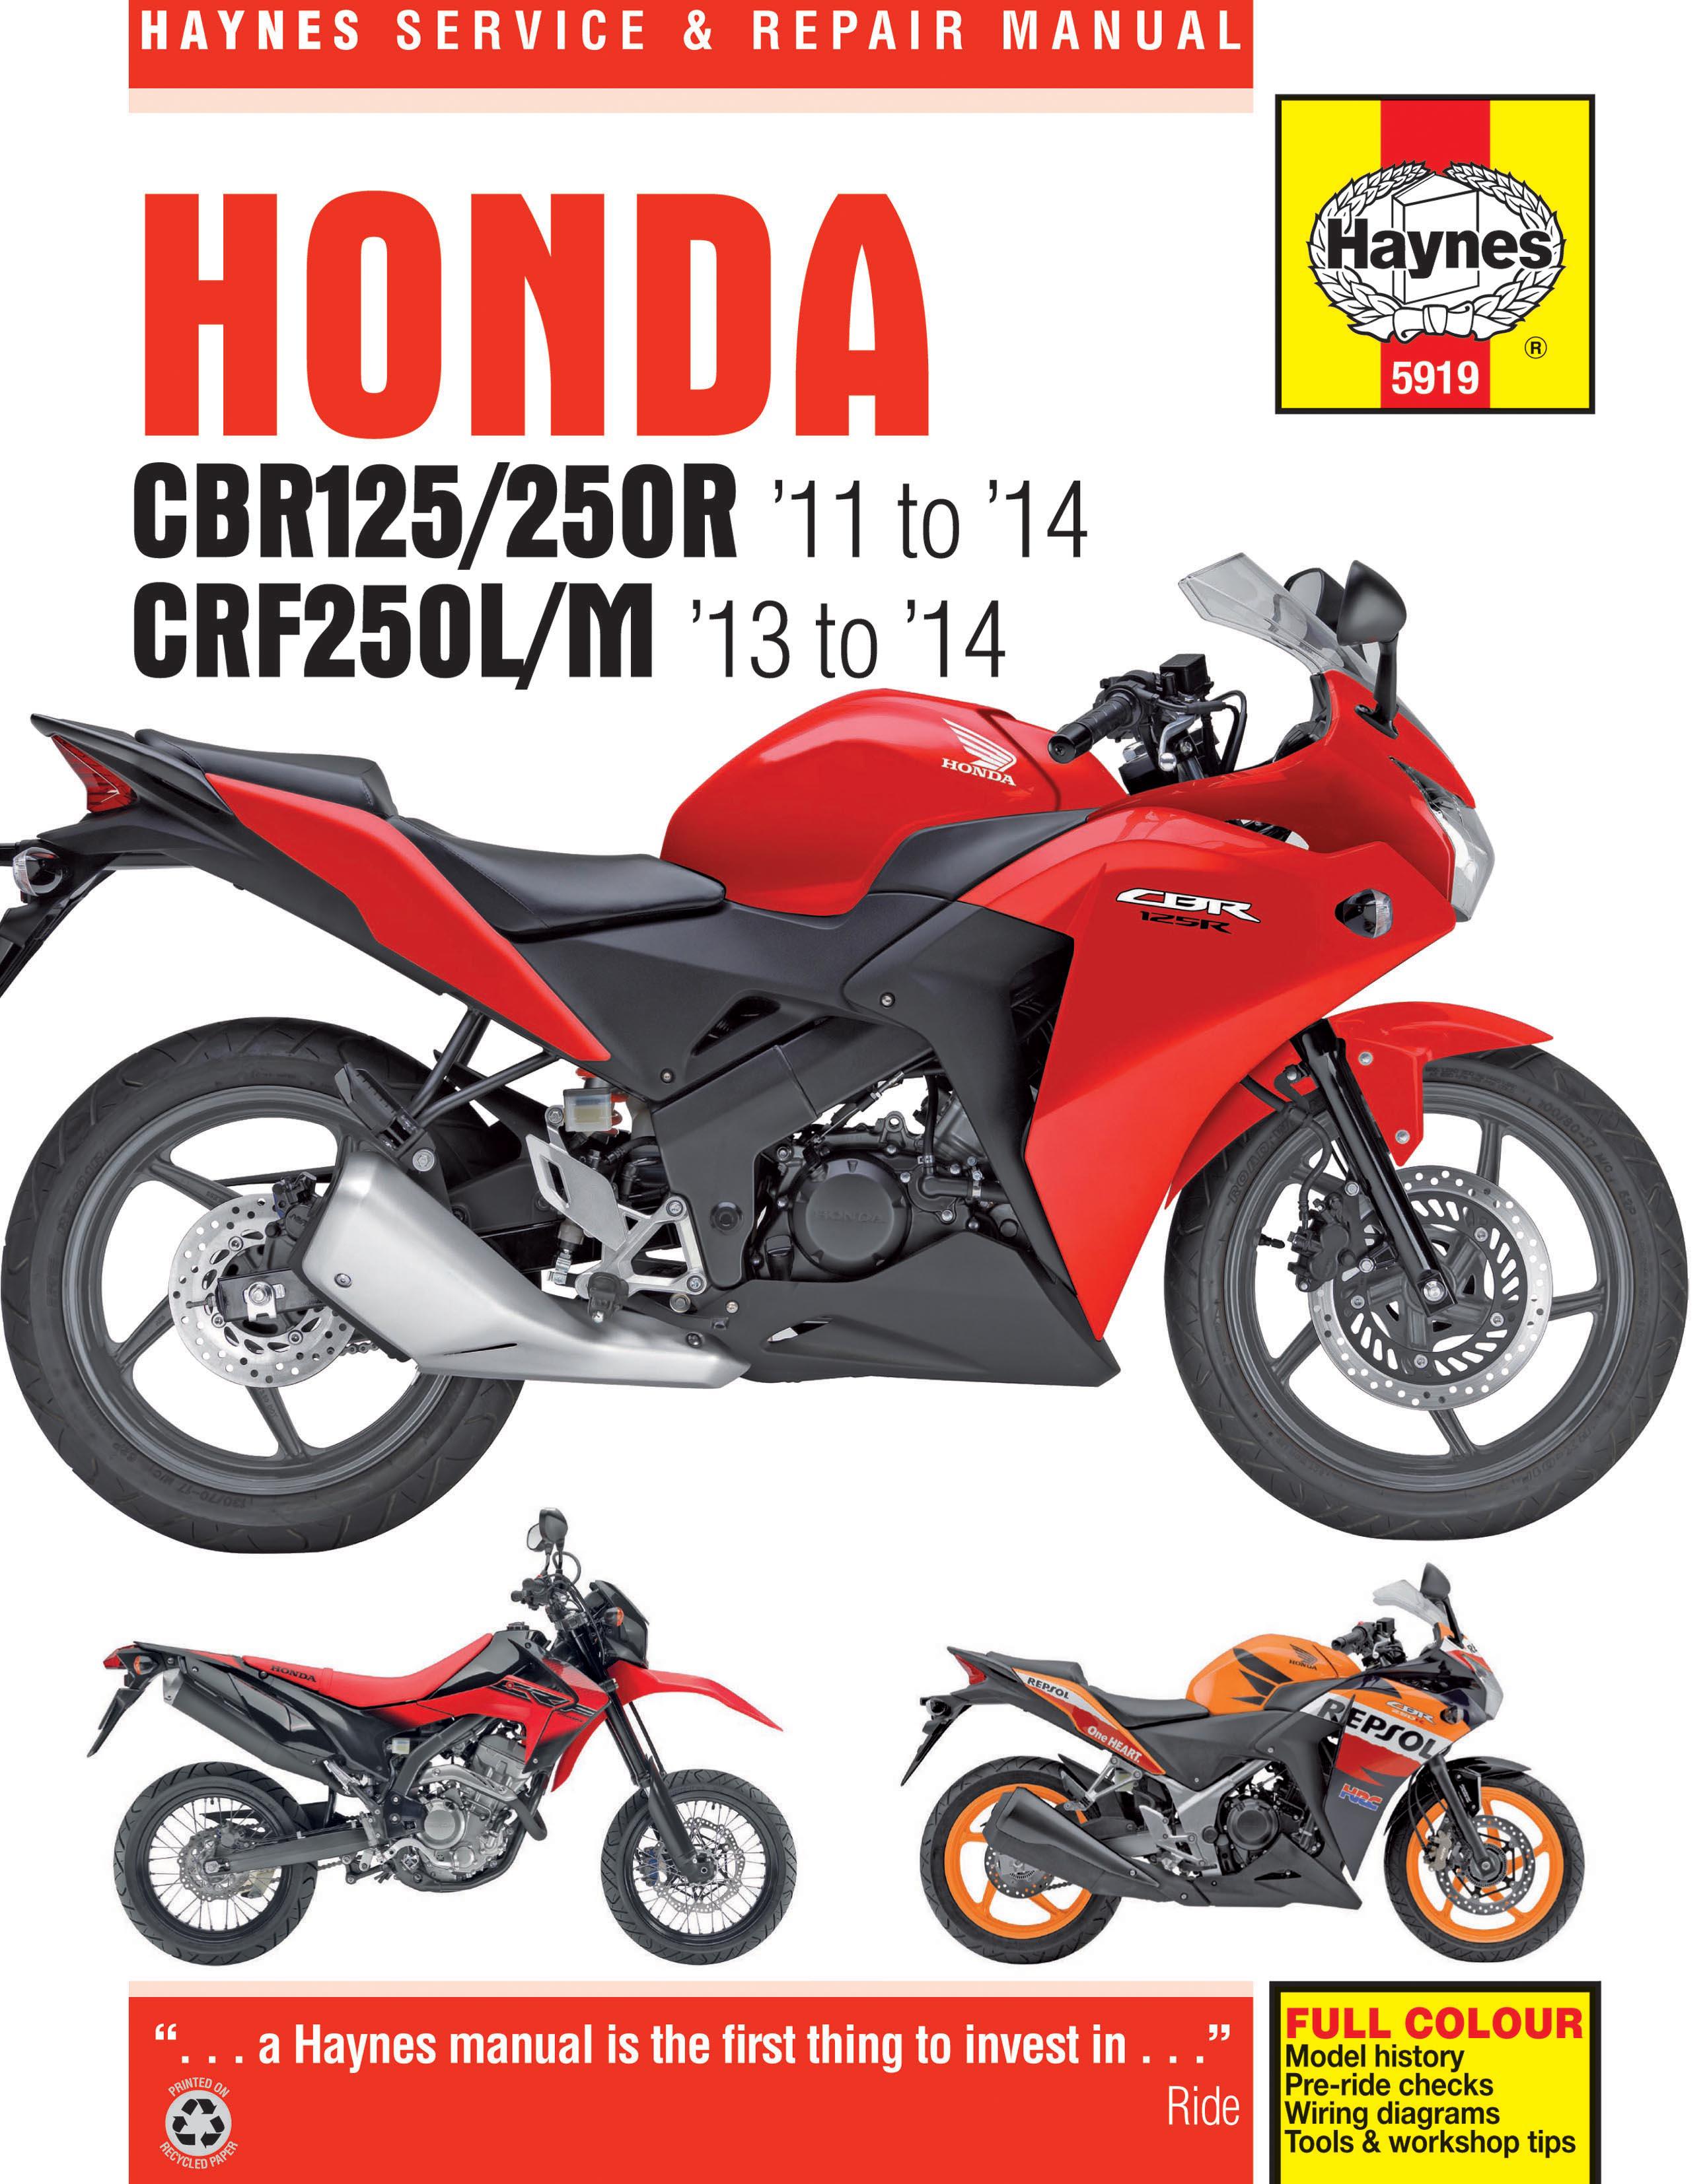 Honda motorcycles ashford #6